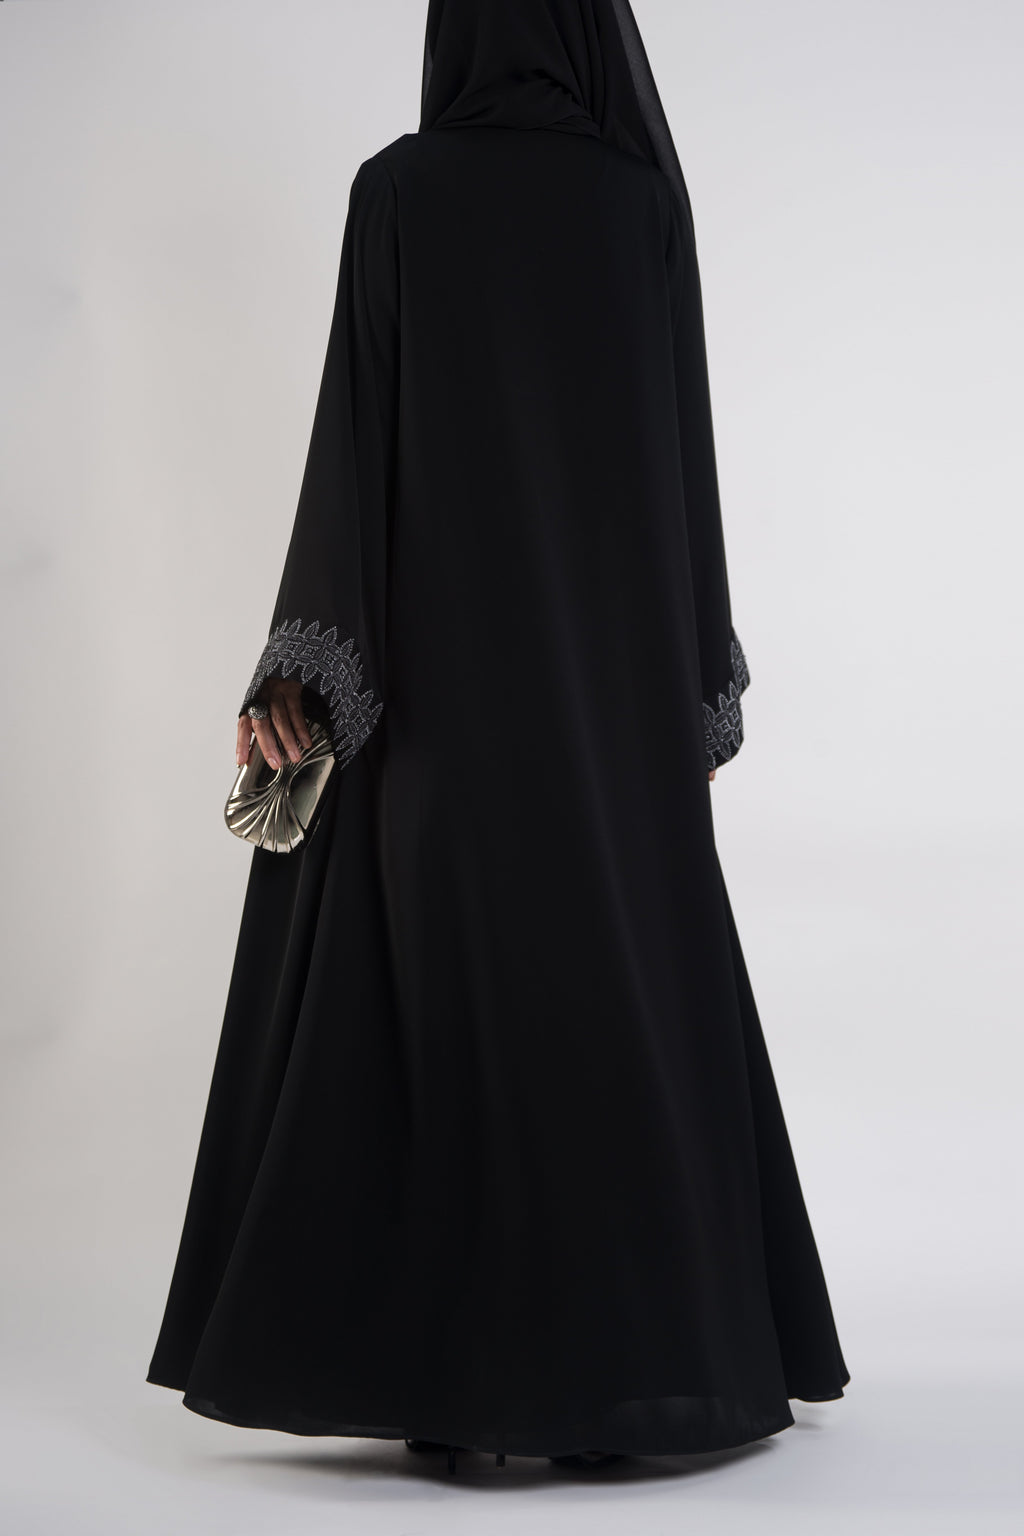 Black sequins abaya - thowby - dubai online abaya shops